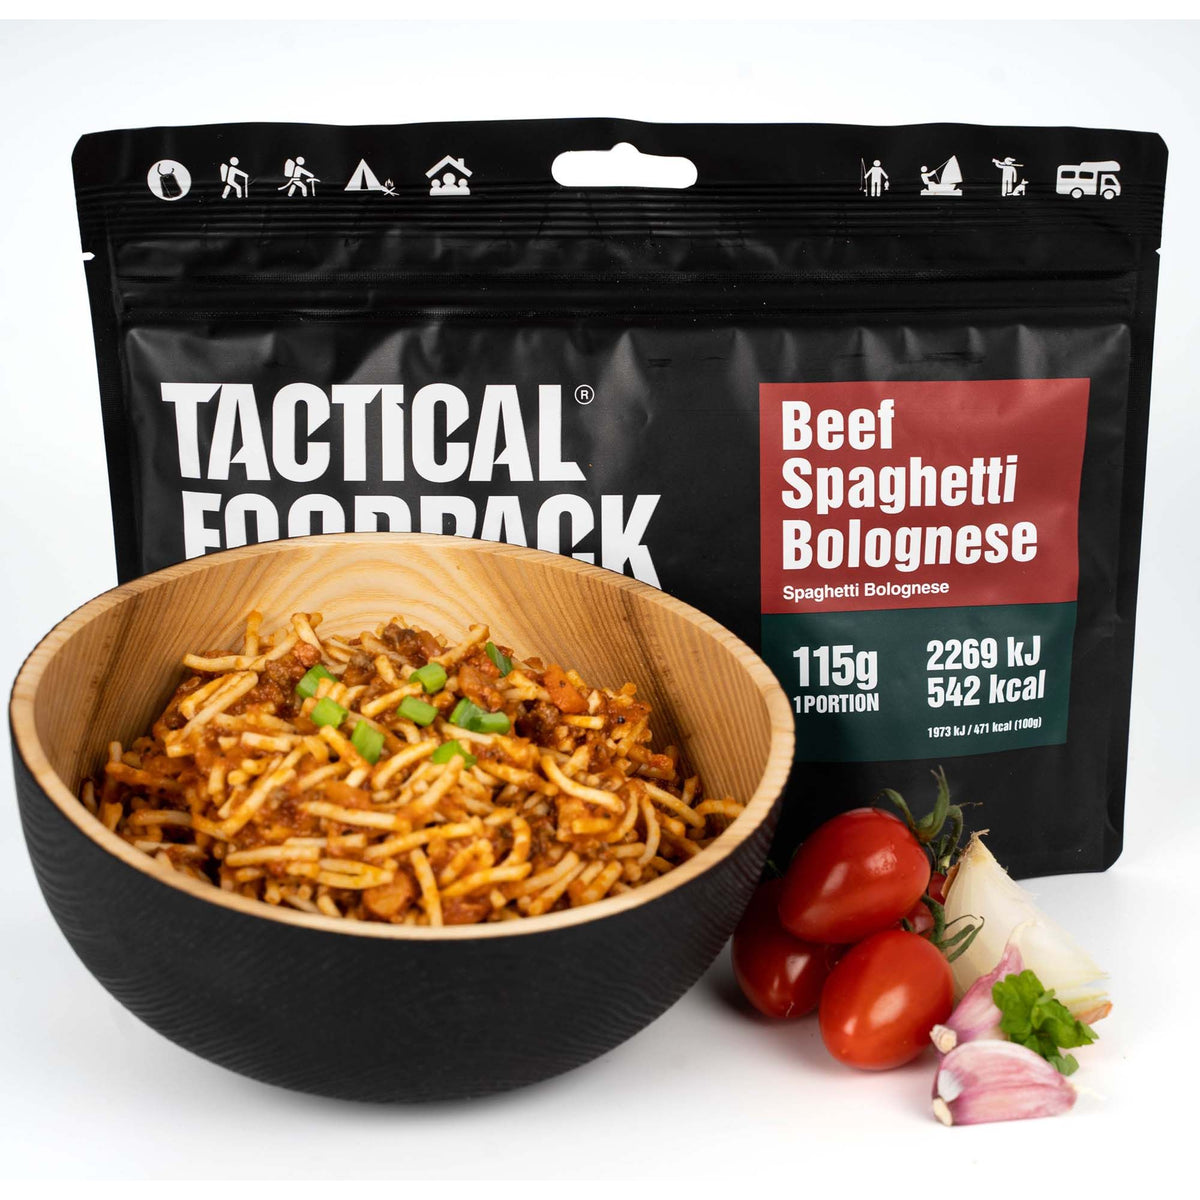 Tactical Foodpack | Beef Spaghetti Bolognese 115g - Spaghetti alla bolognese